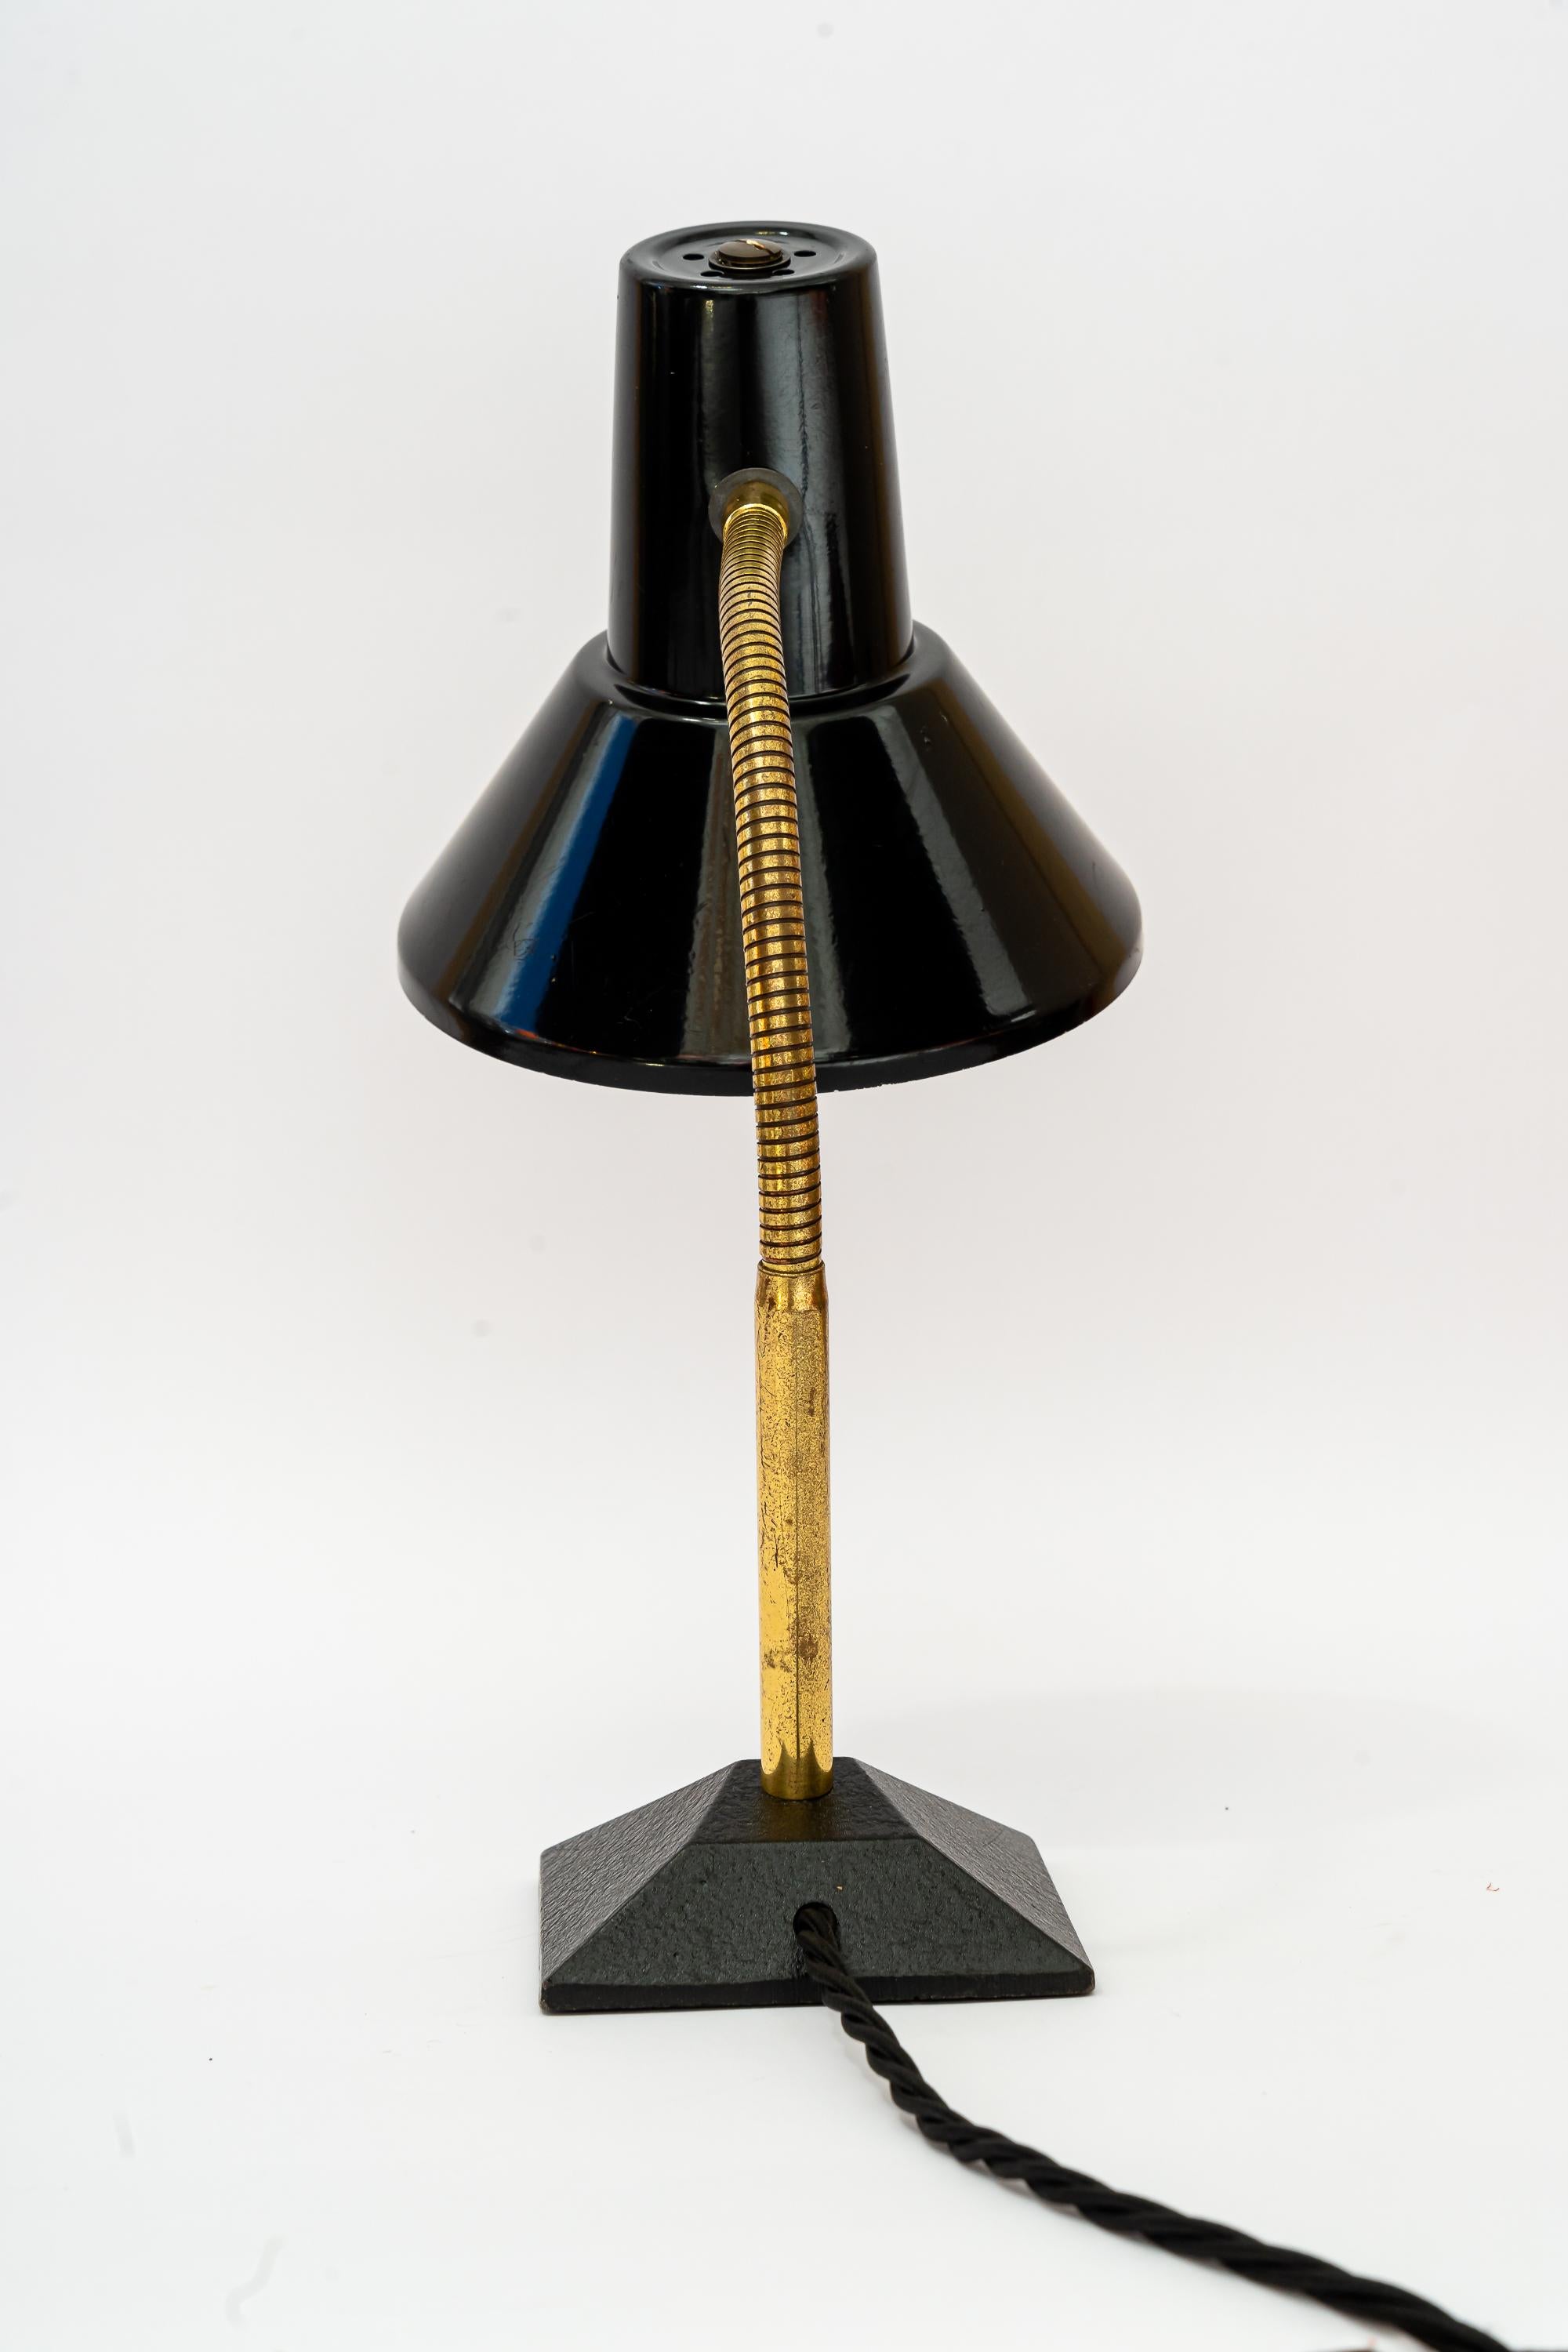 Adjustable vintage table lamp vienna around 1960s
Original condition